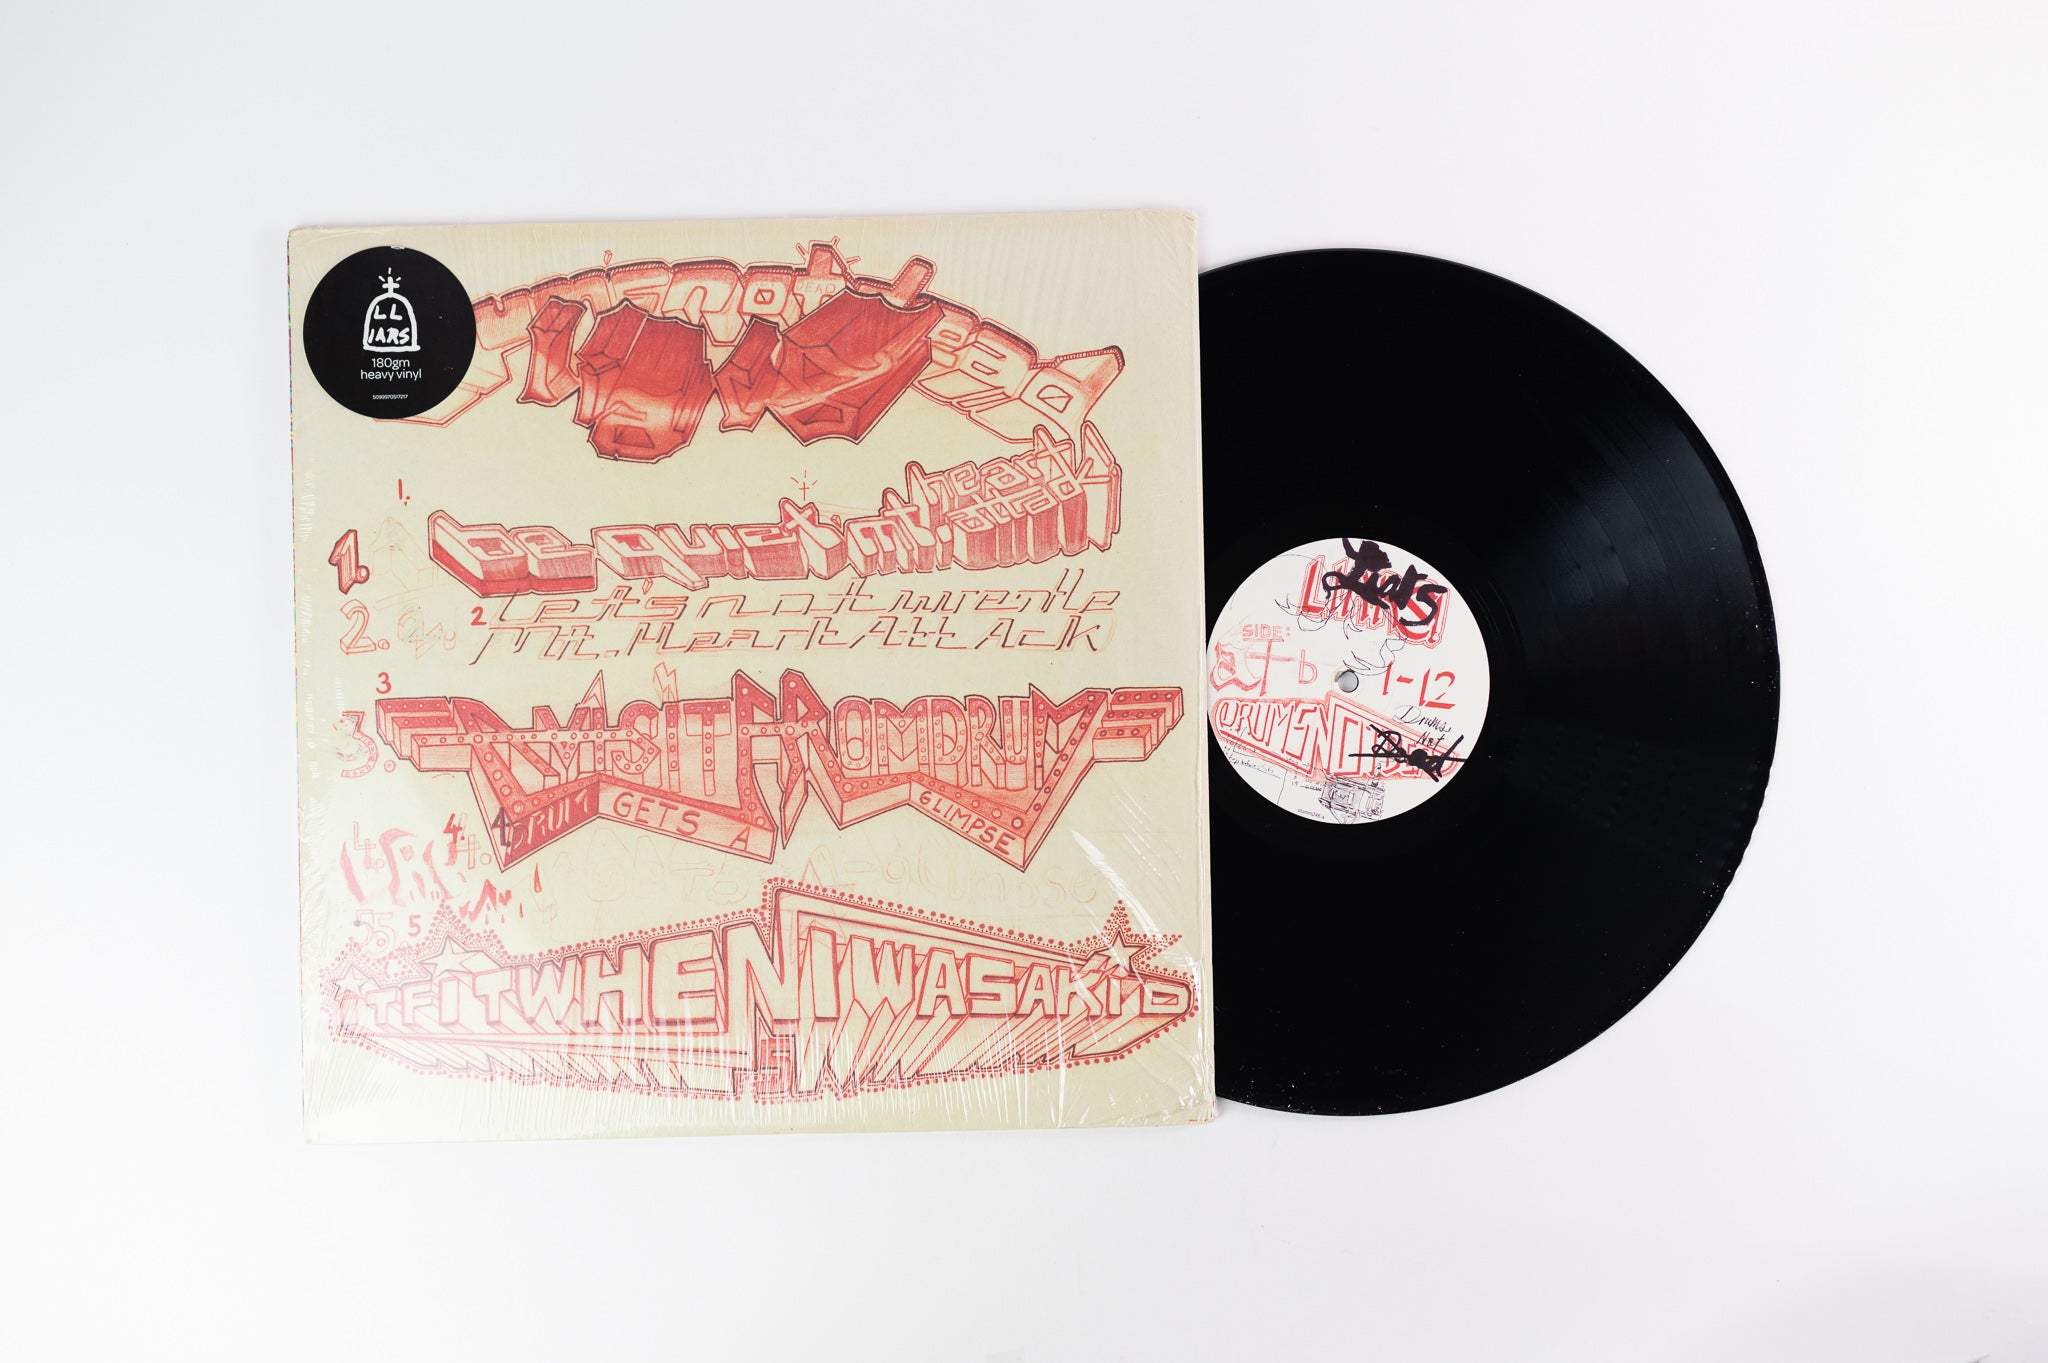 Liars - Drum's Not Dead on Mute 180 Gram Reissue